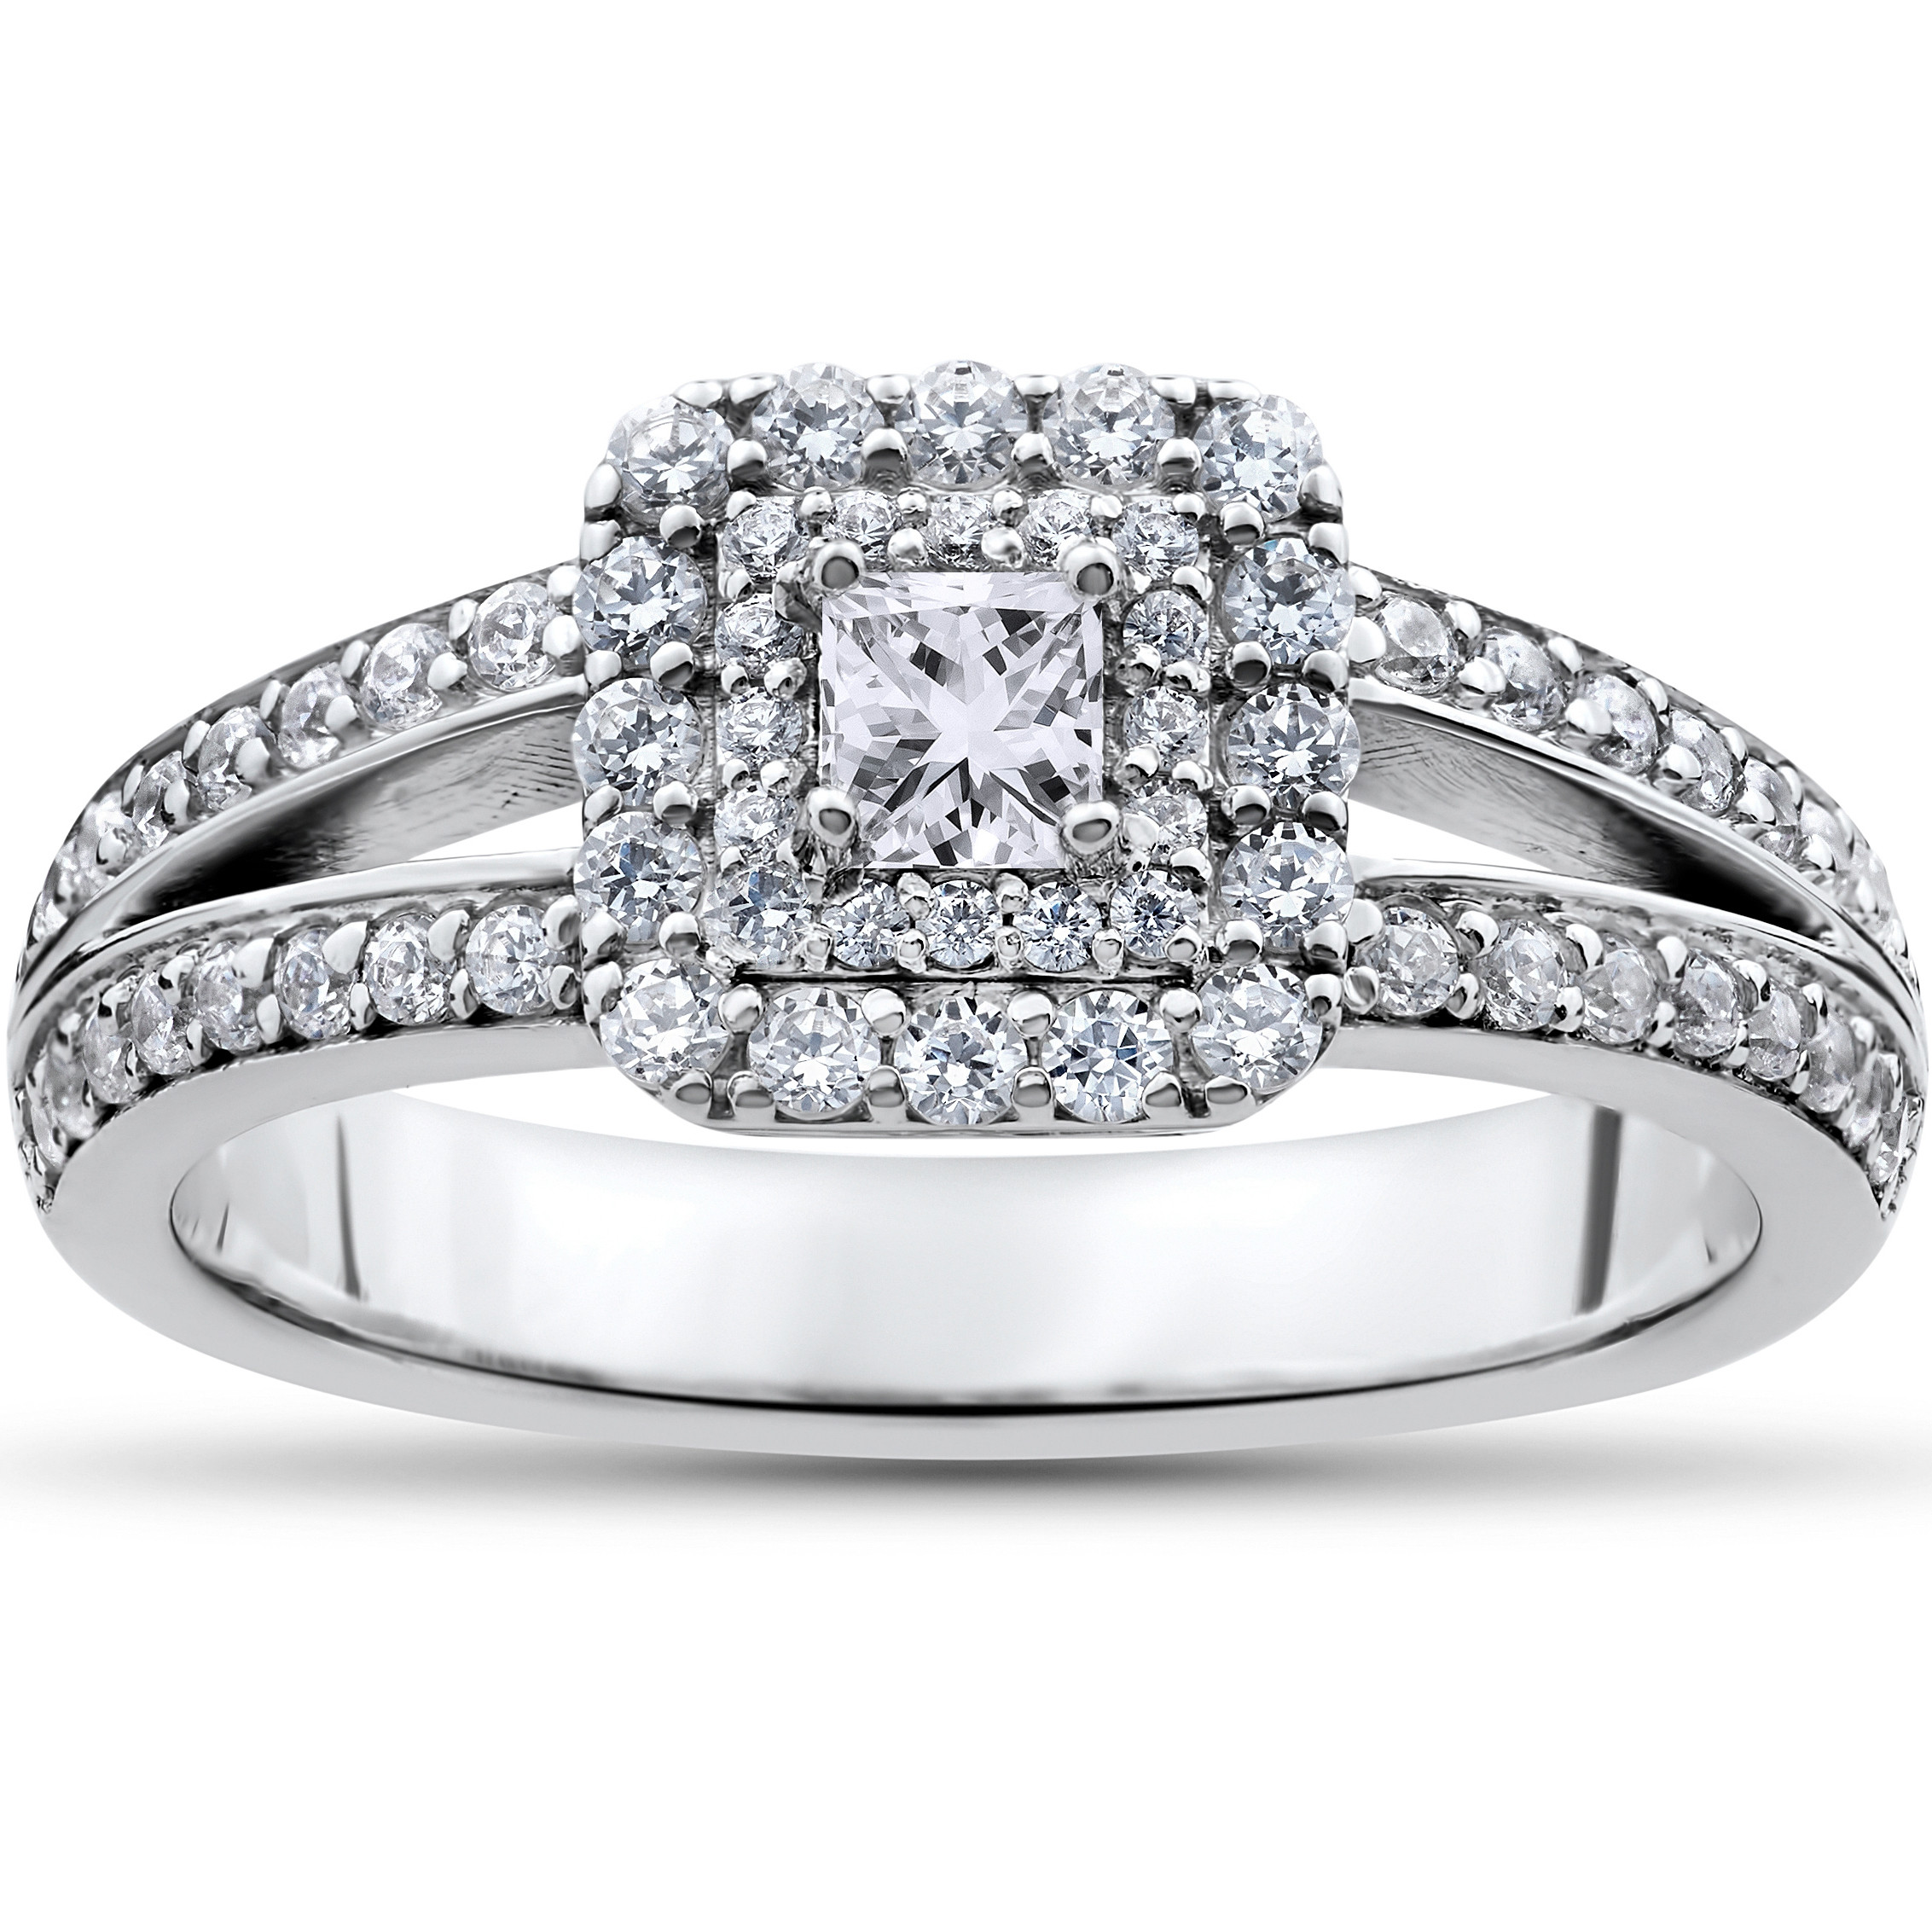 Diamond Engagement Rings Princess Cut
 1 ct Princess Cut Diamond Double Halo Engagement Ring 14k